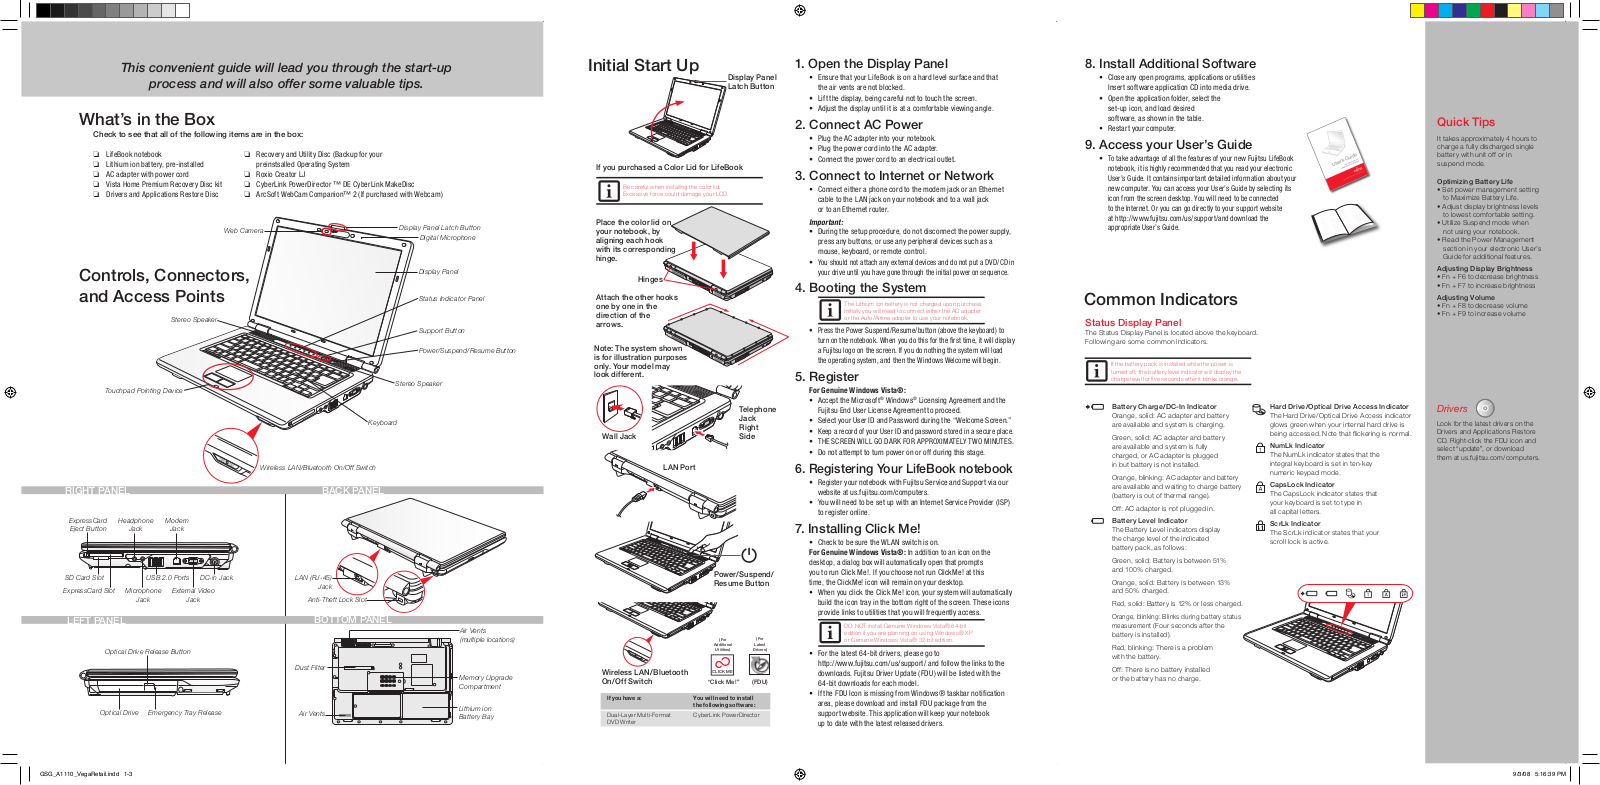 Fujitsu Lifebook A1110 Getting Started Guide